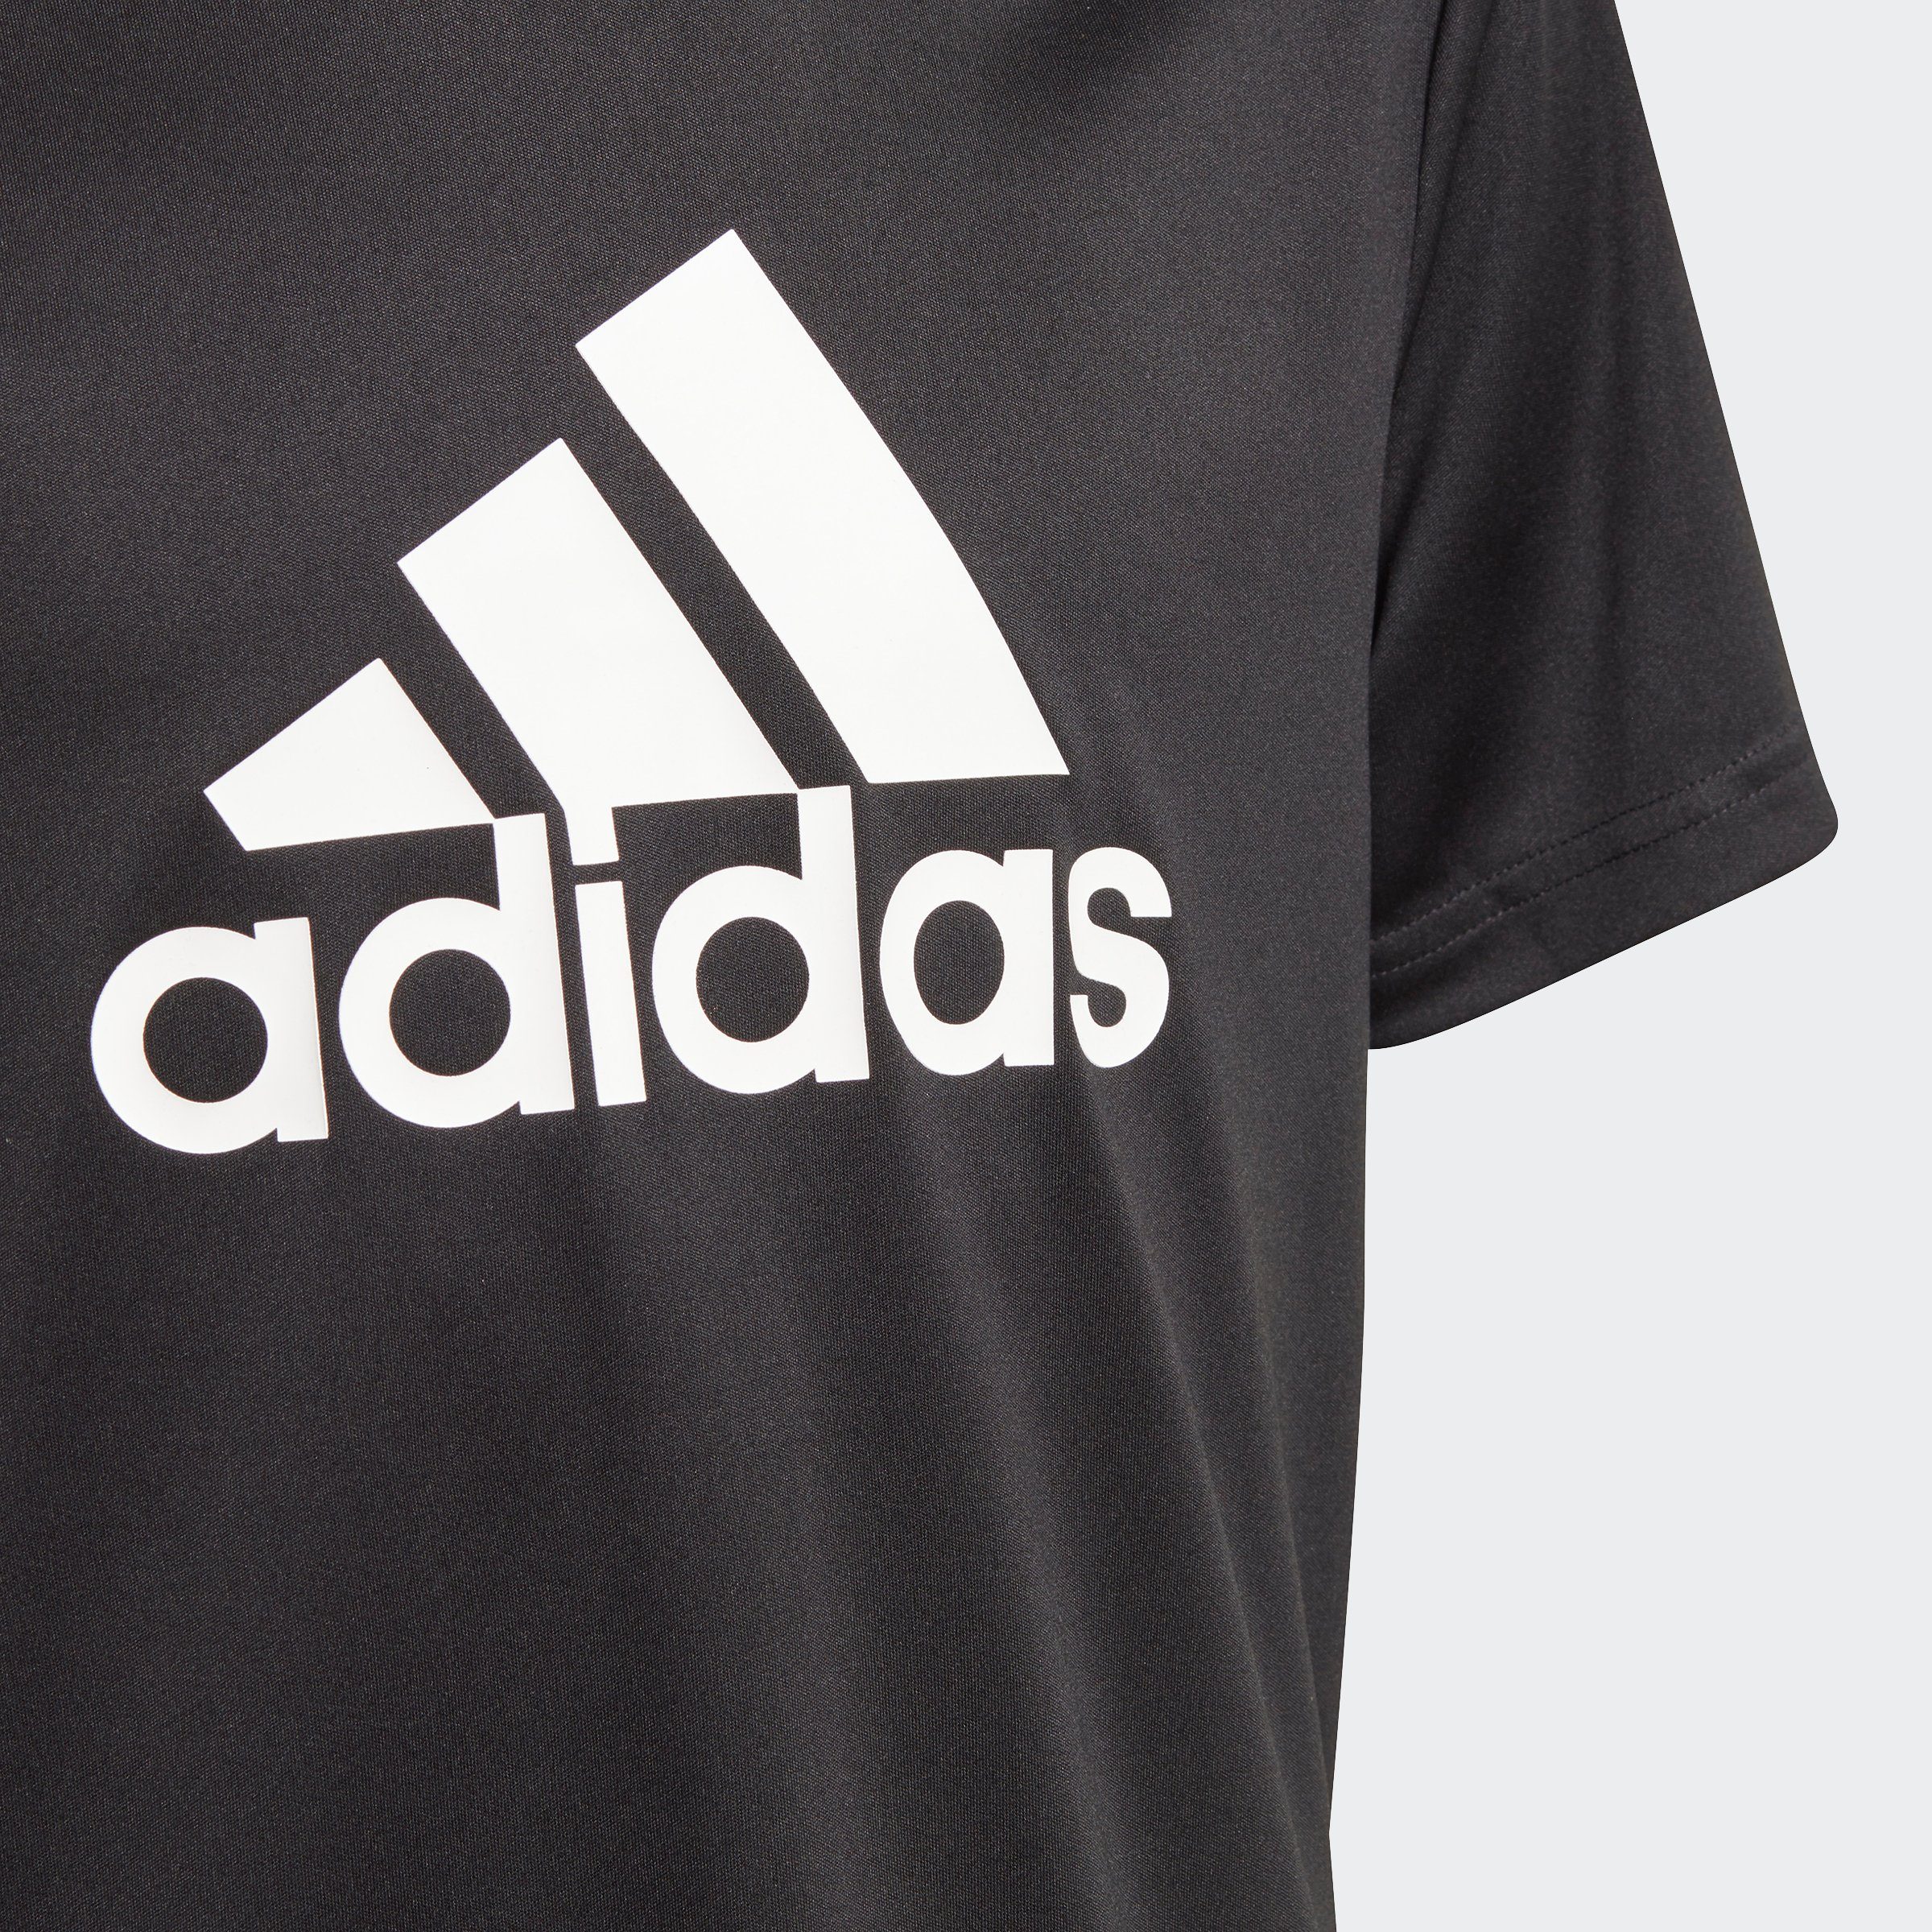 adidas BLACK/WHITE T-Shirt LOGO Sportswear BIG ADIDAS DESIGNED TO MOVE